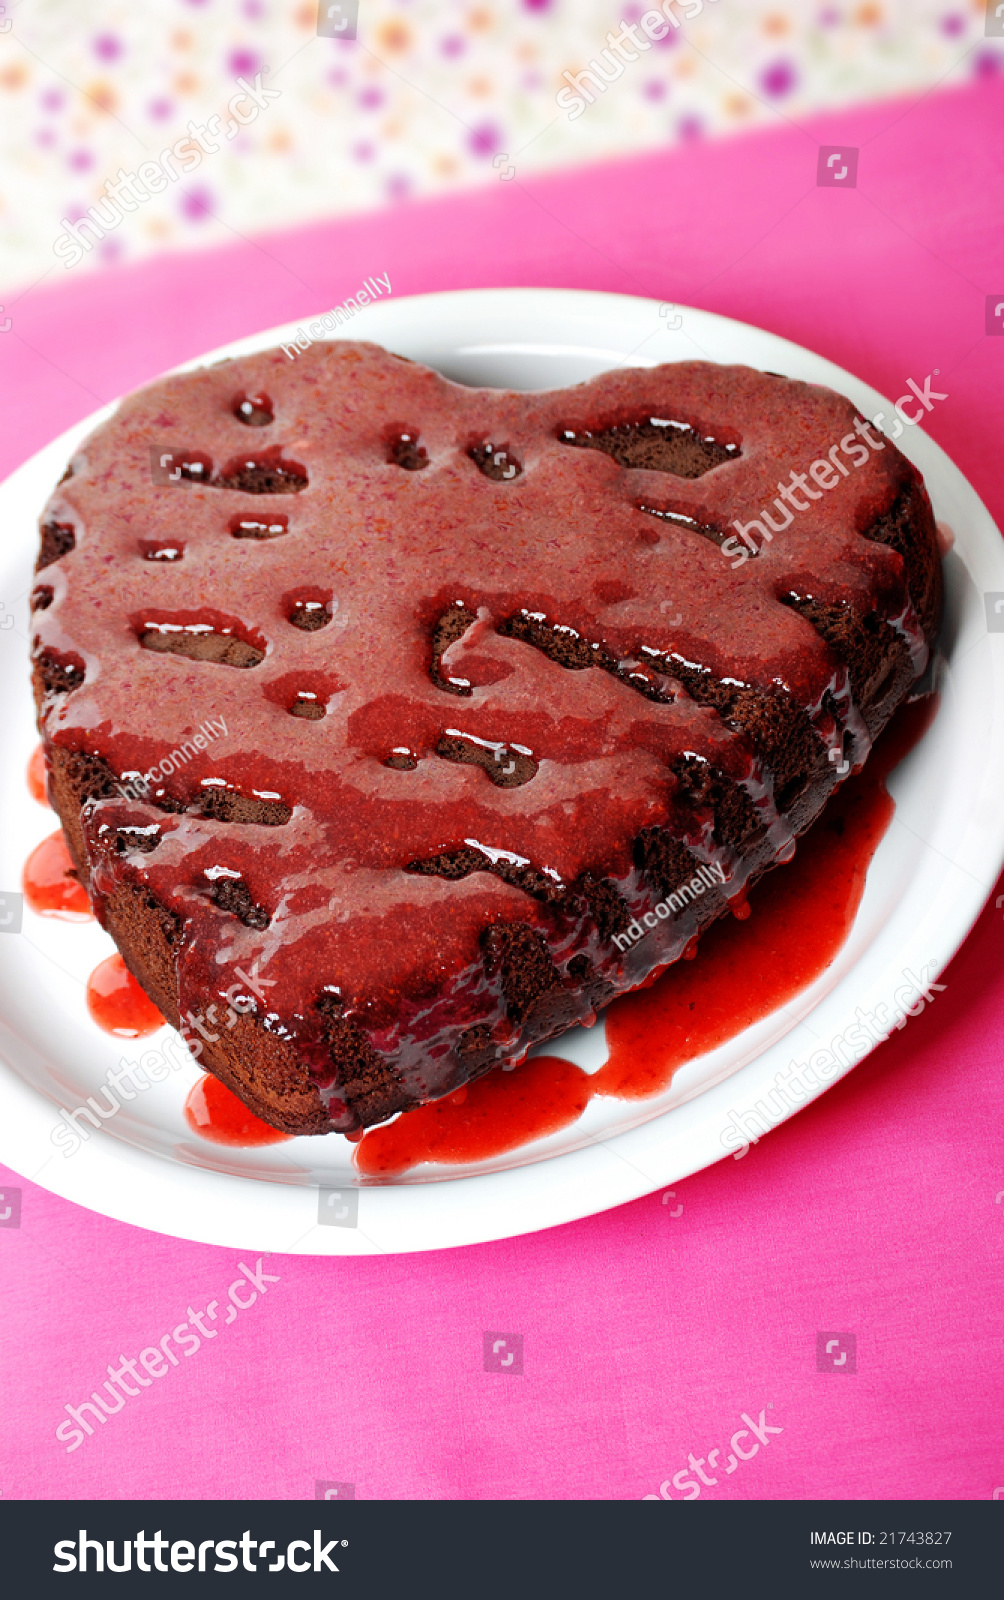 Heart-Shaped Chocolate Cake With Strawberry Glaze Stock Photo 21743827 ...